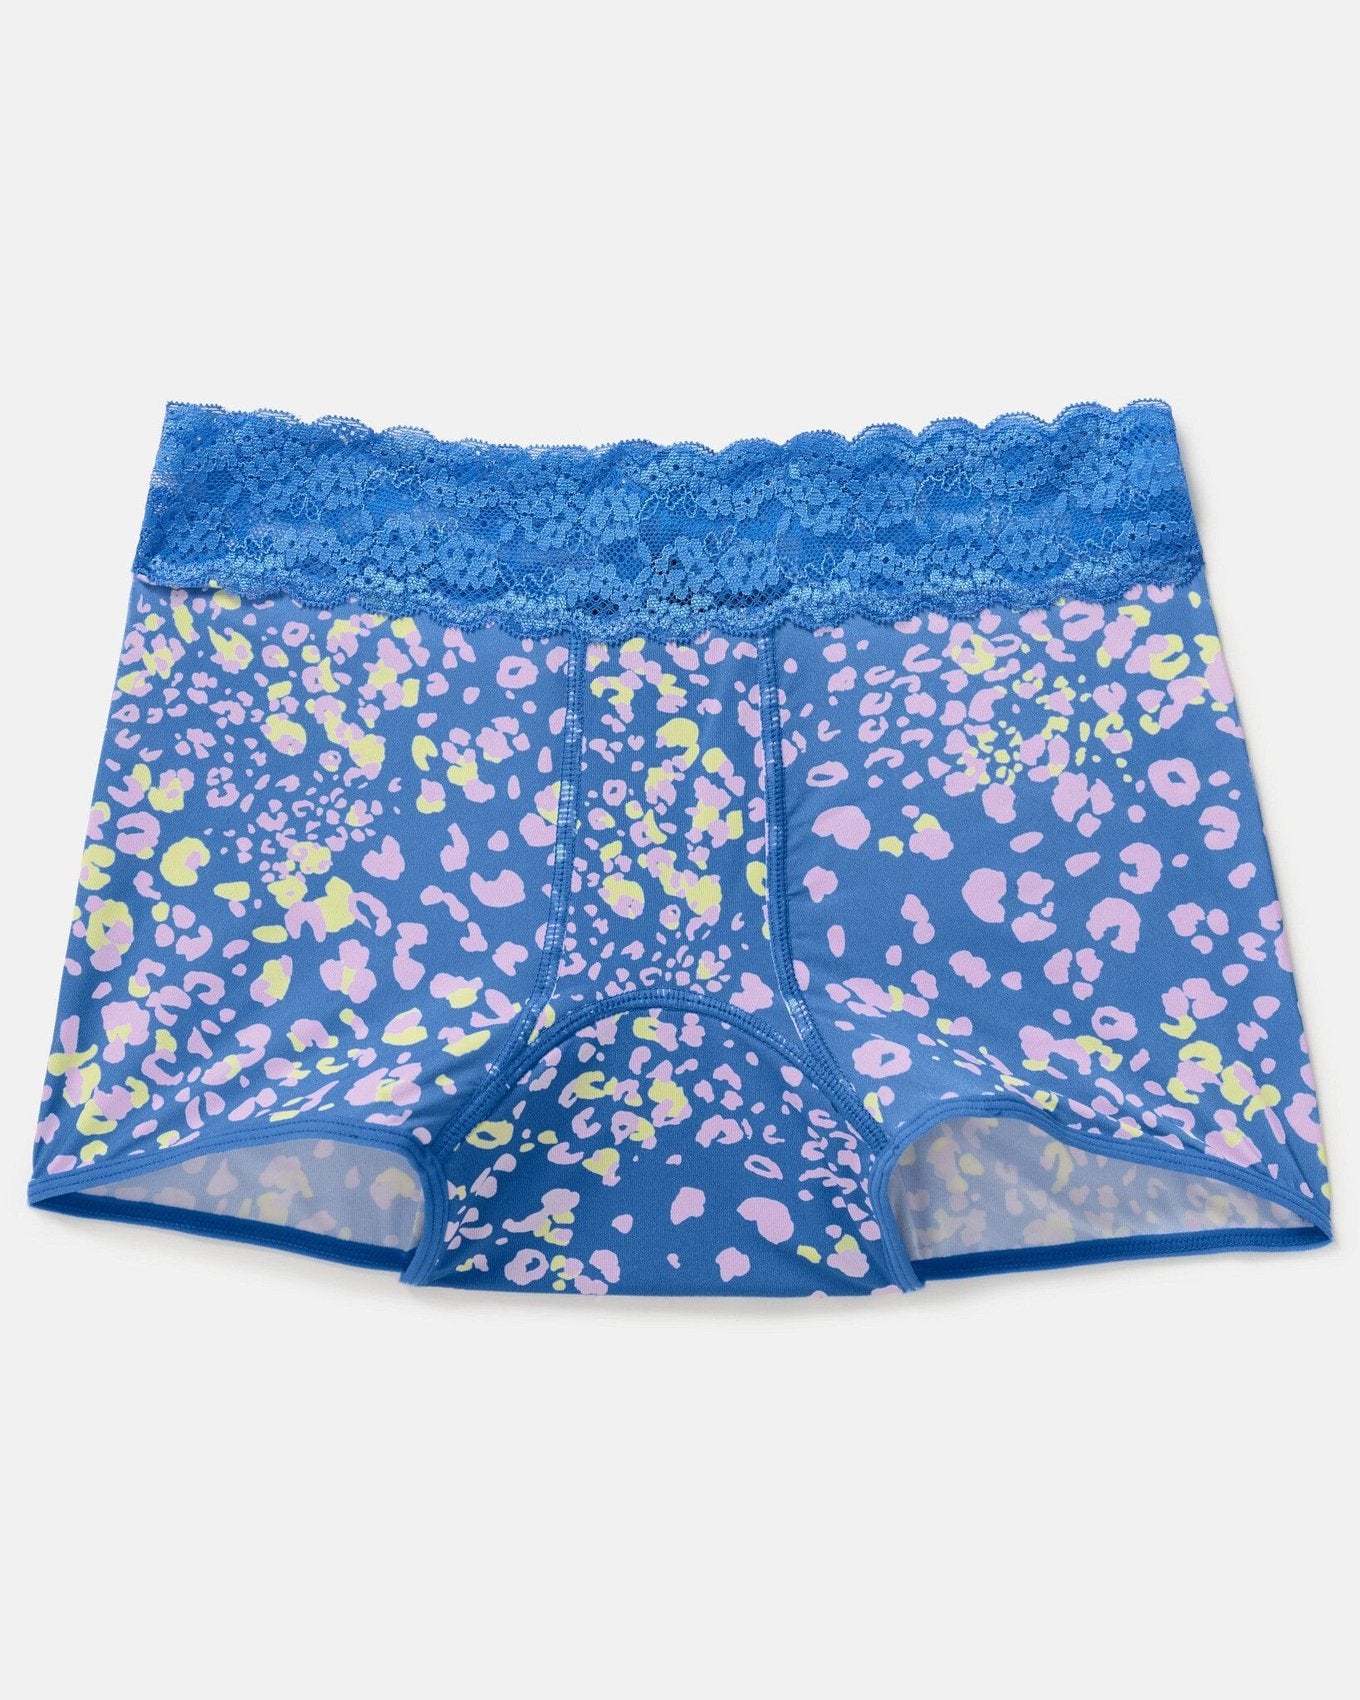 Joyja Emily period-proof panty in color Jungle Confetti C01 and shape shortie